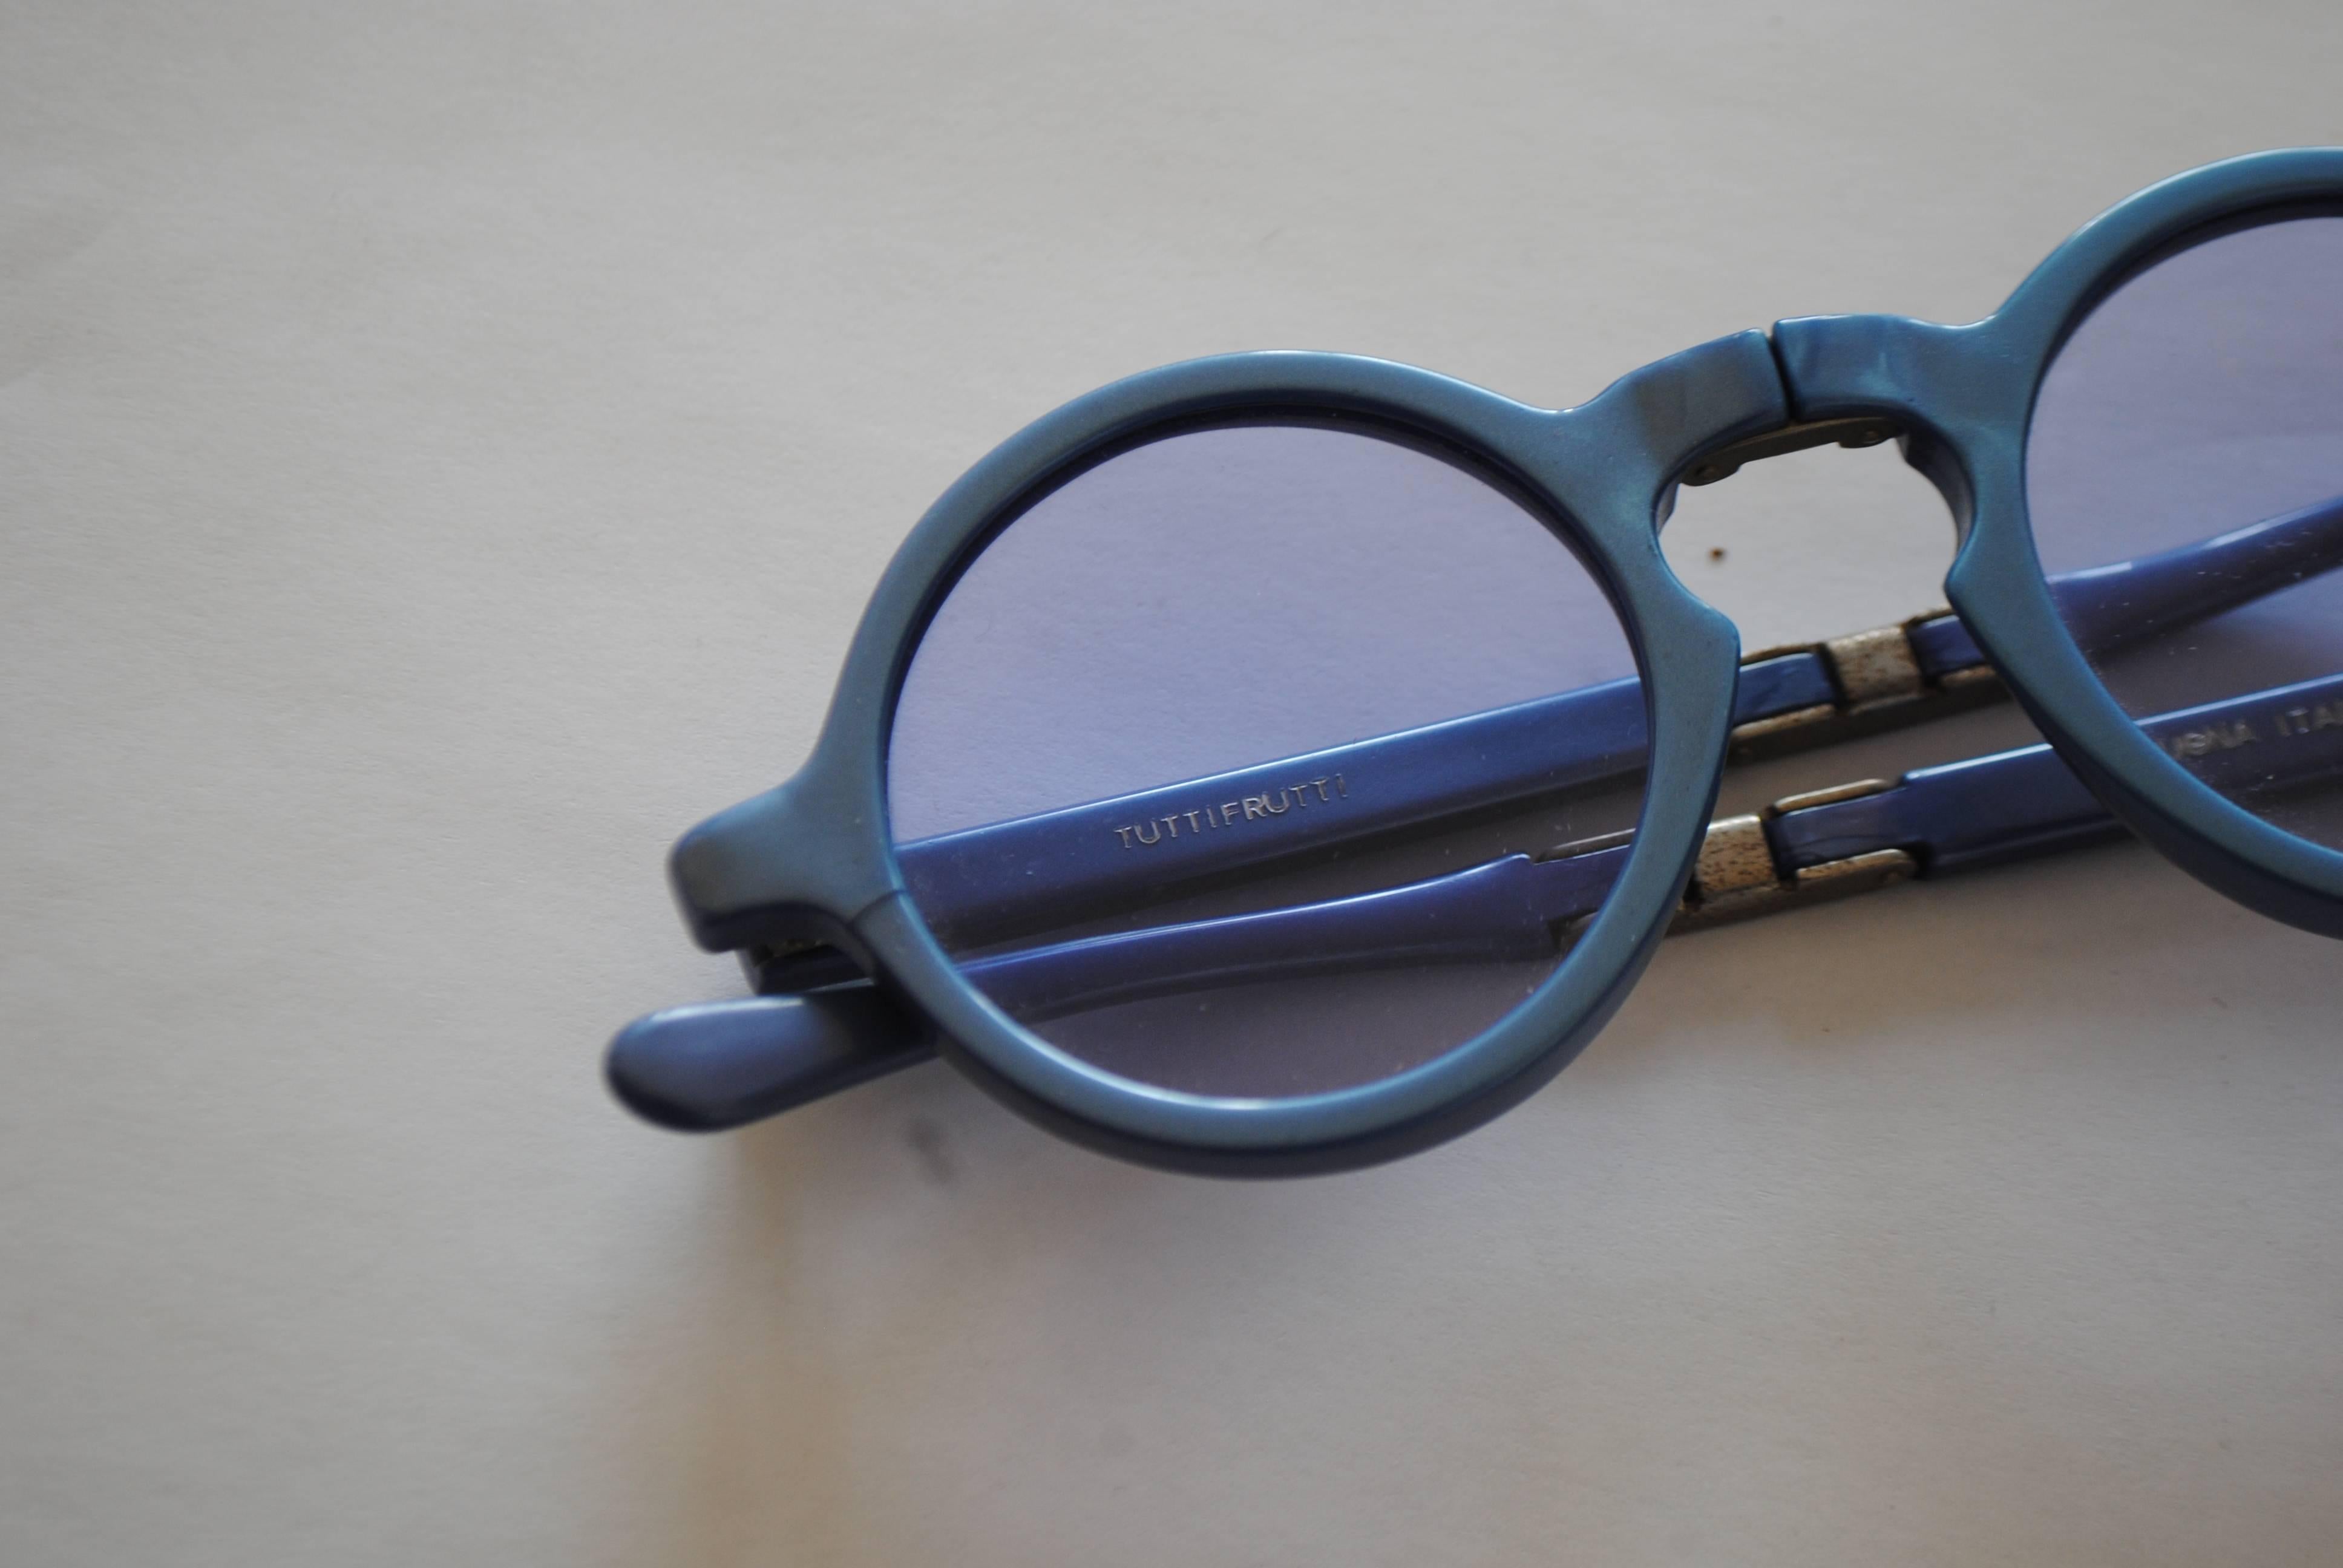 1990s Tuttifrutti Blu Sunglasses
Totally made in italy